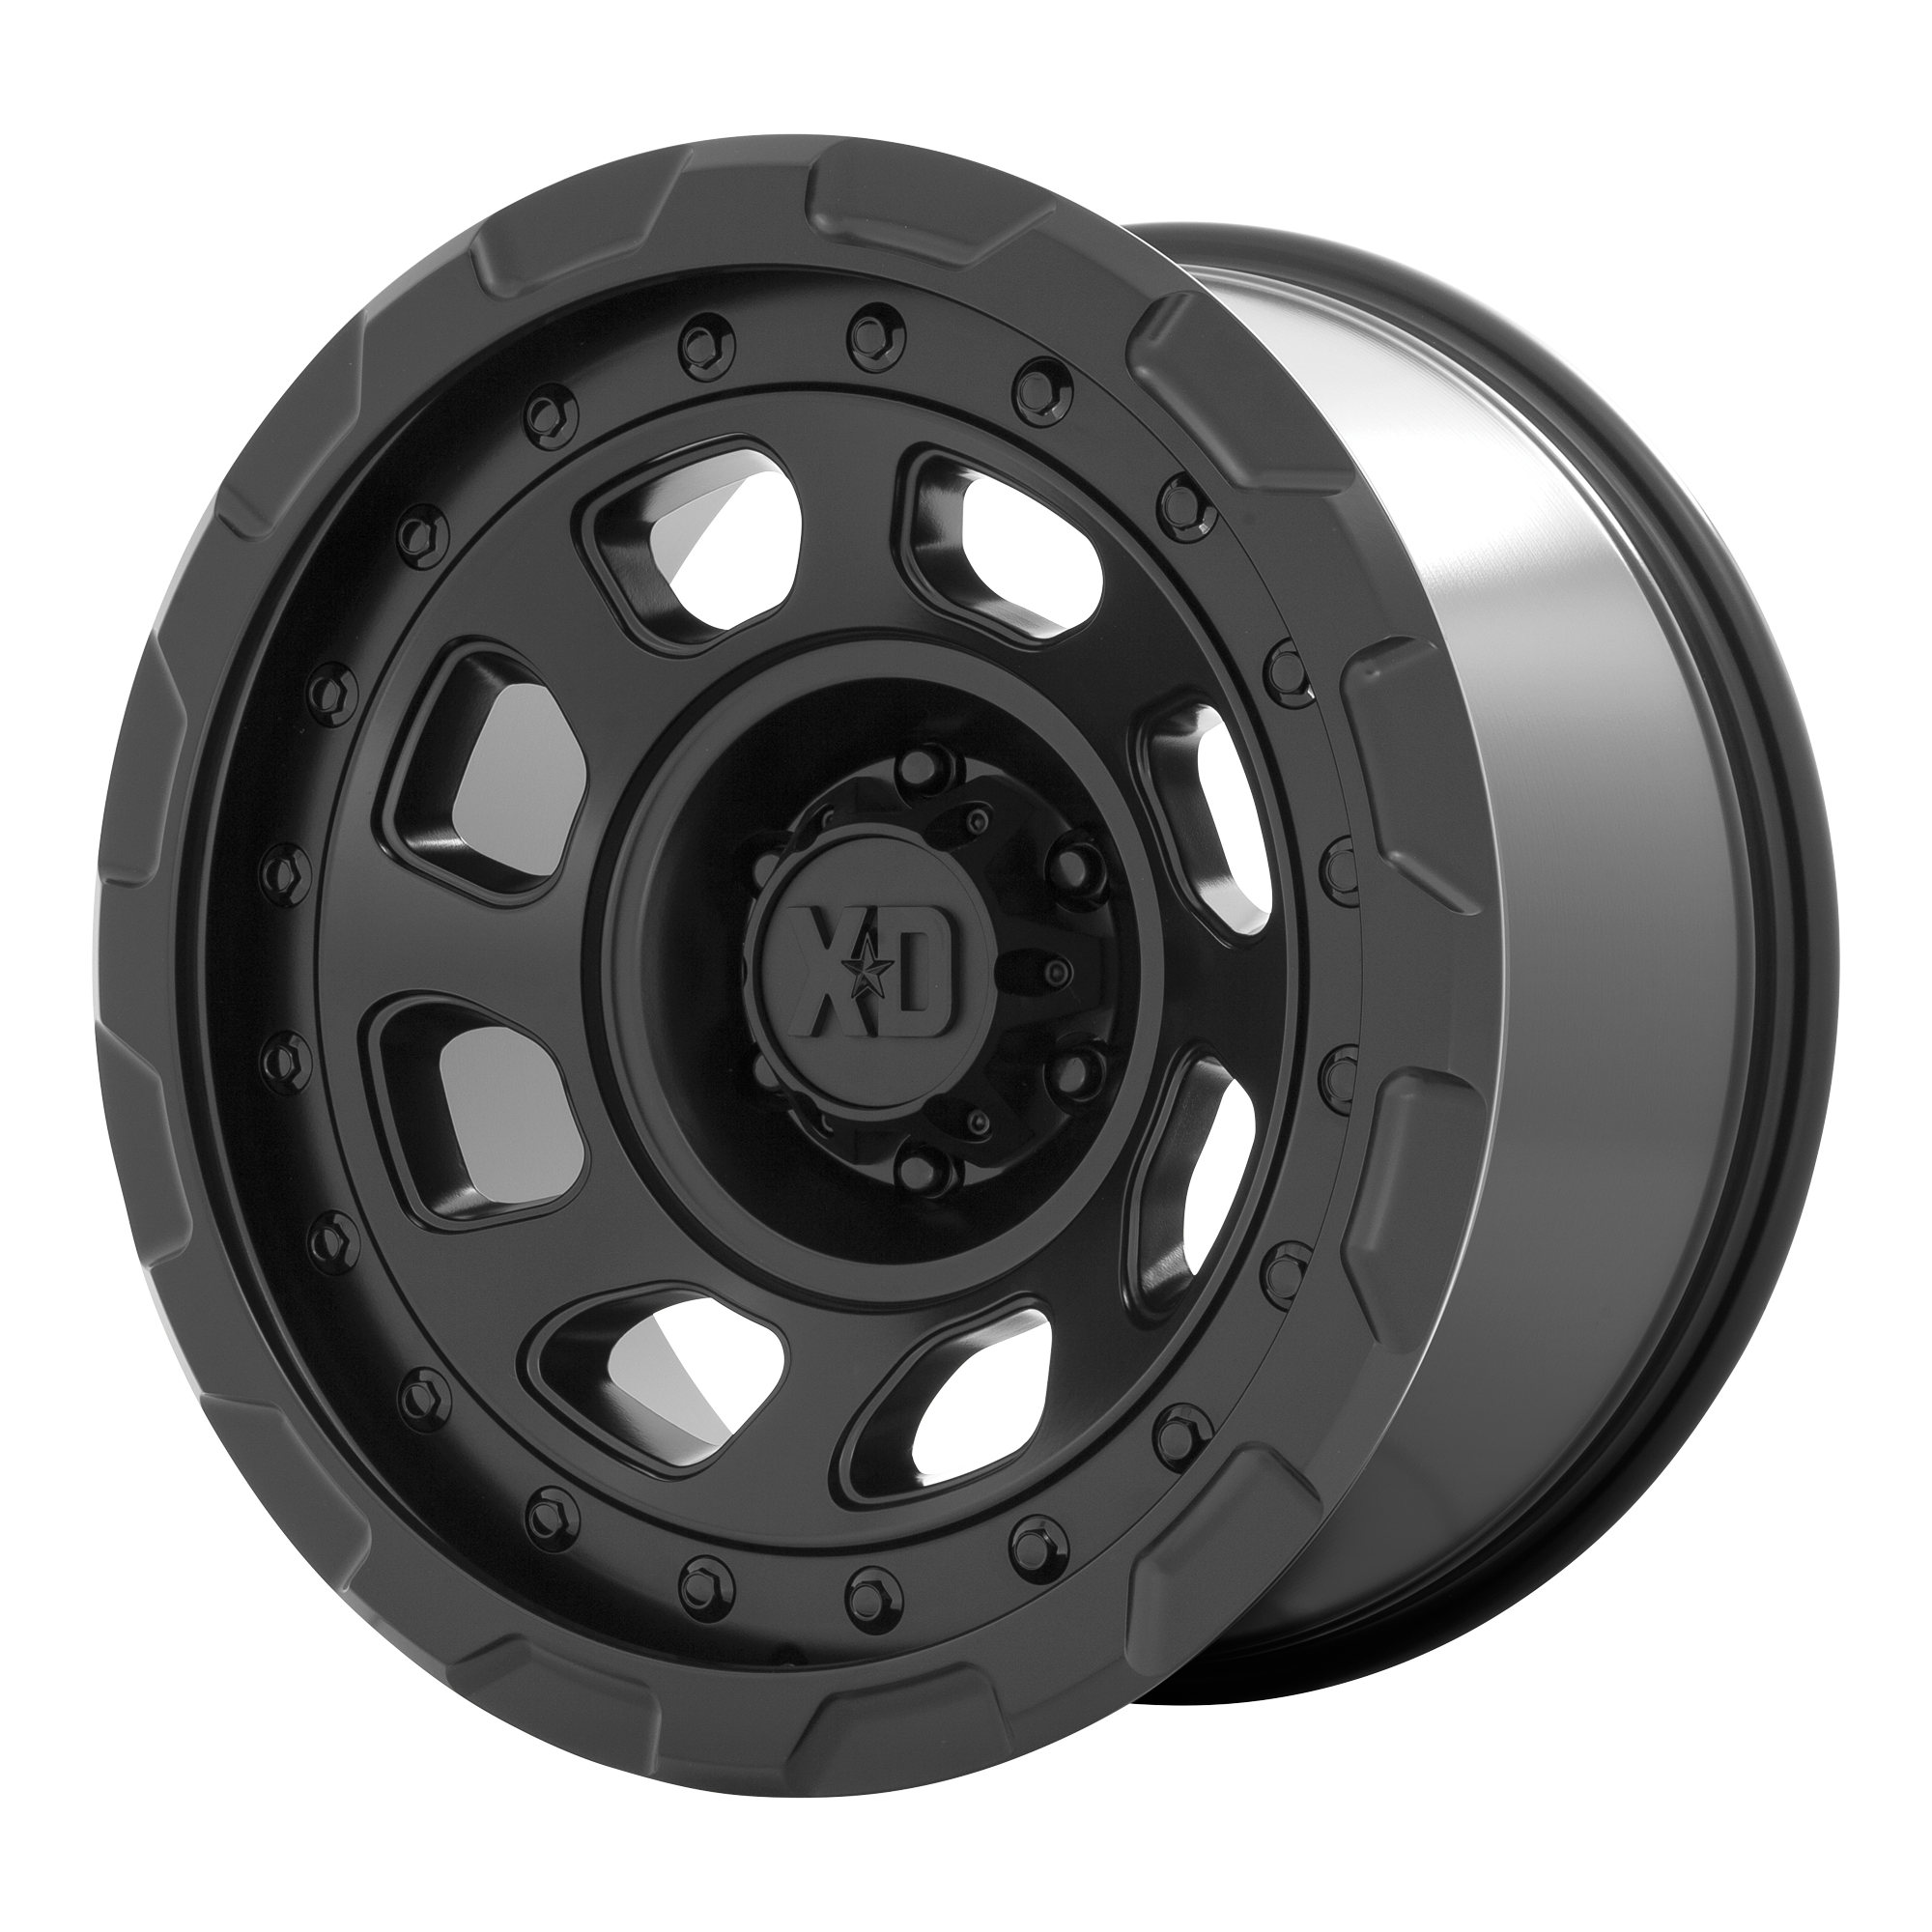 XD 20"x9" Non-Chrome Satin Black Custom Wheel ARSWCWXD86129080700